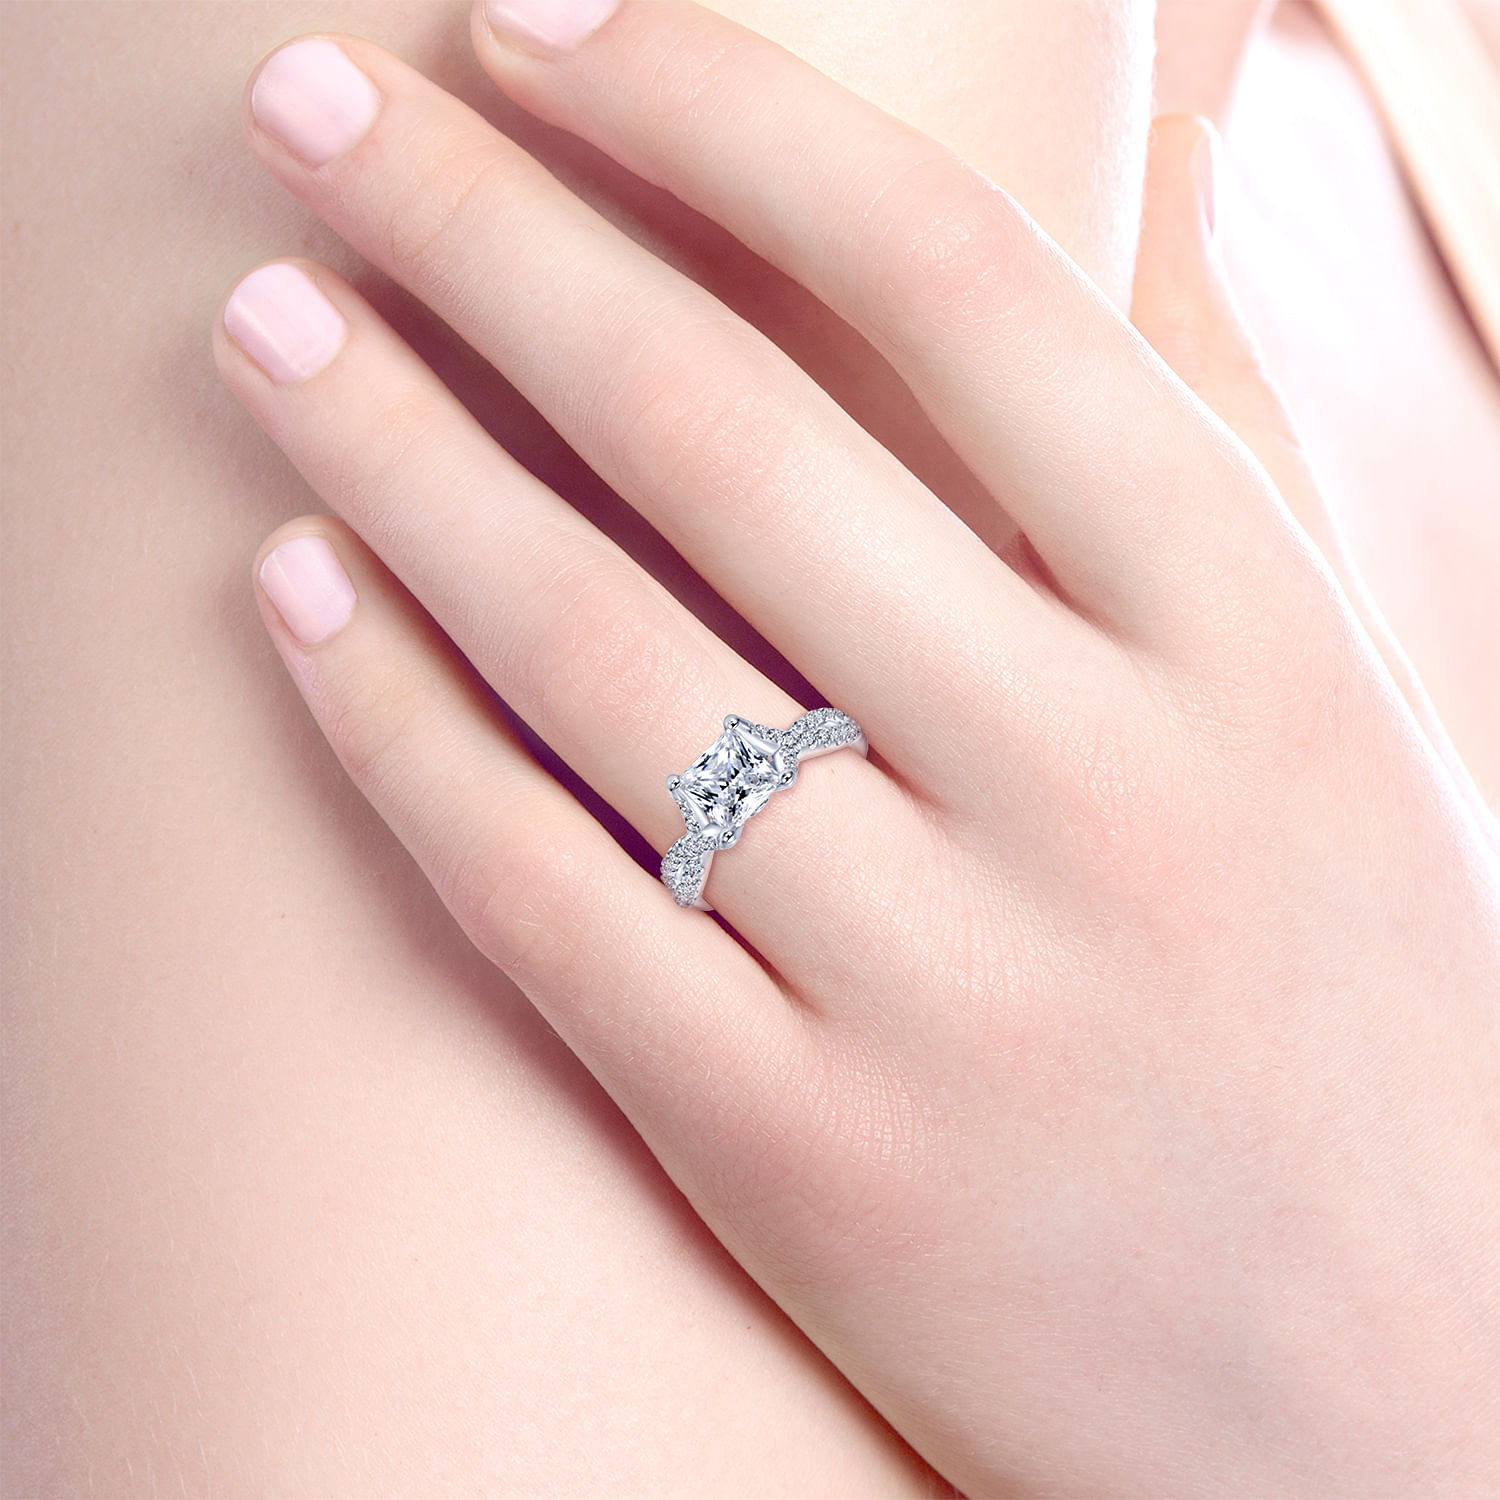 14K White Gold Twisted Princess Cut Diamond Engagement Ring